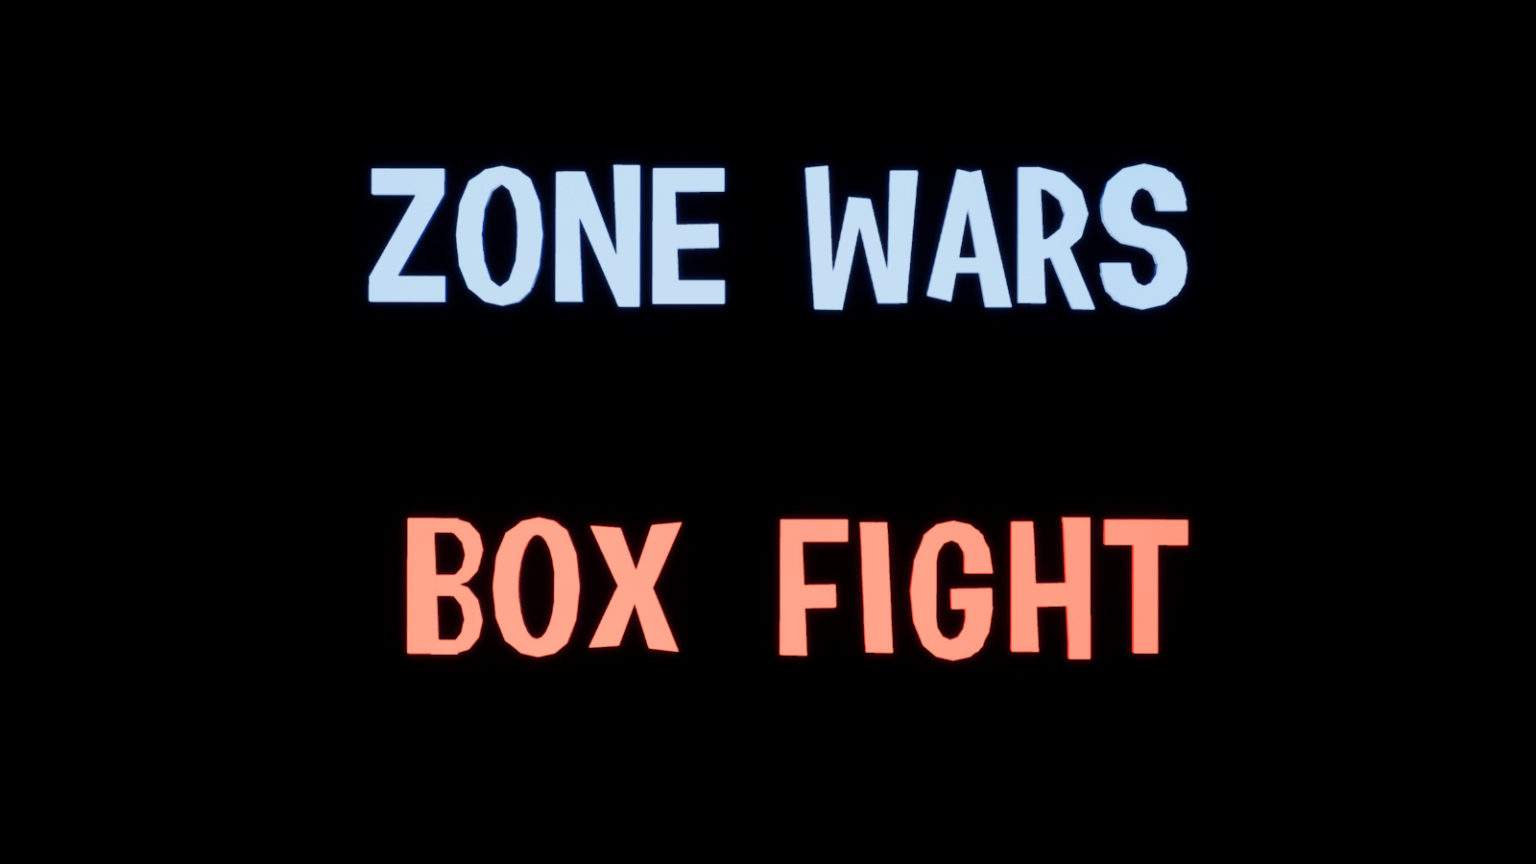 DUO QUALIFYING BOX FIGHT & ZONE WARS